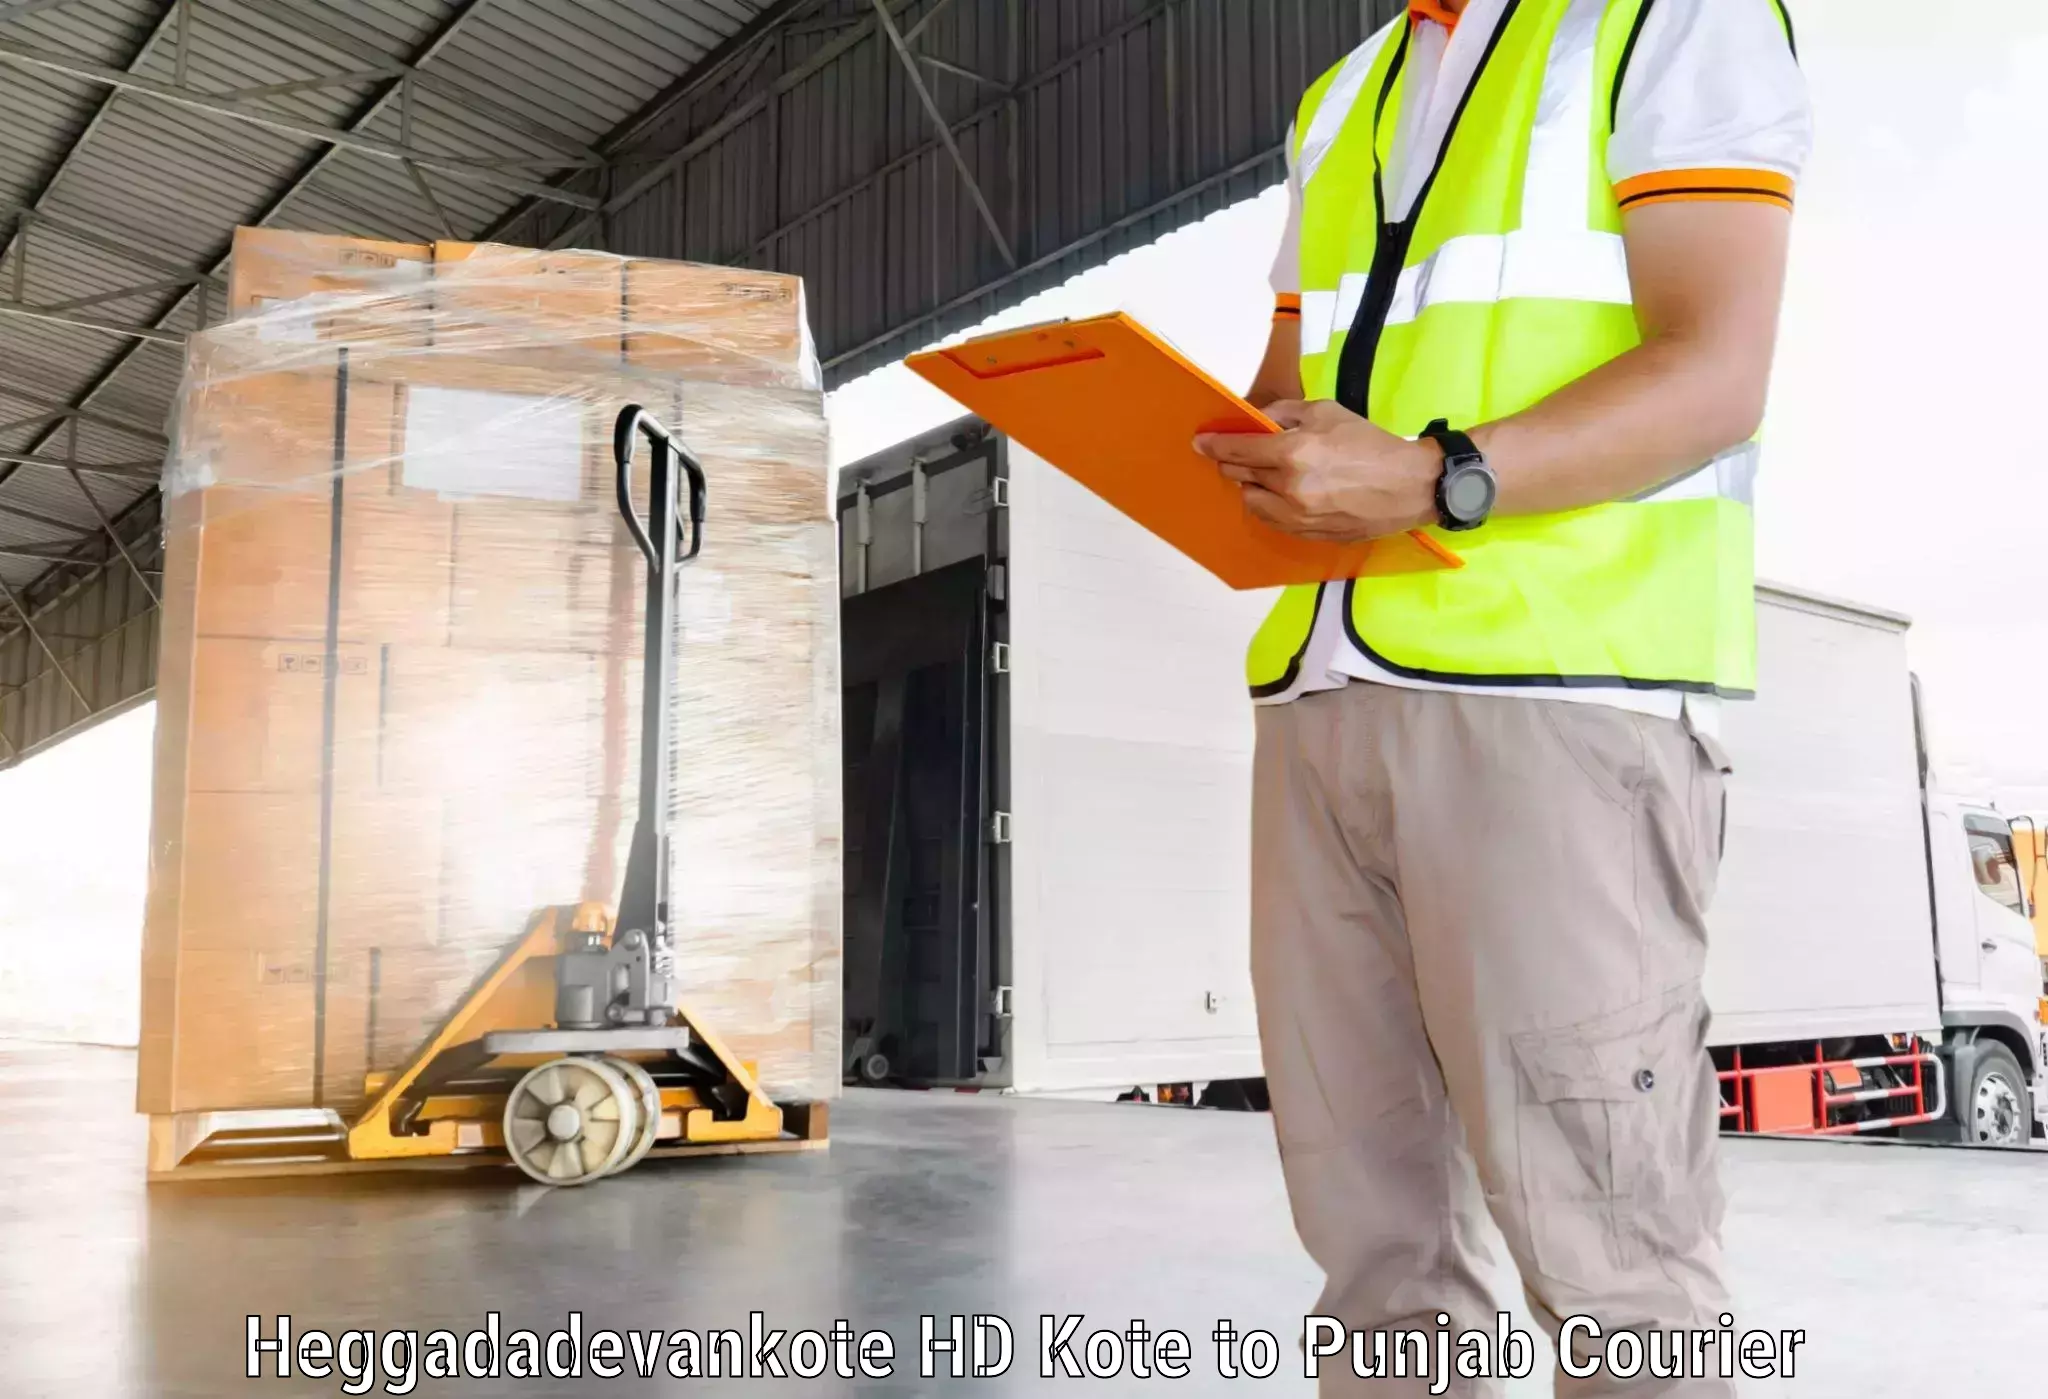 Efficient logistics management Heggadadevankote HD Kote to Malout